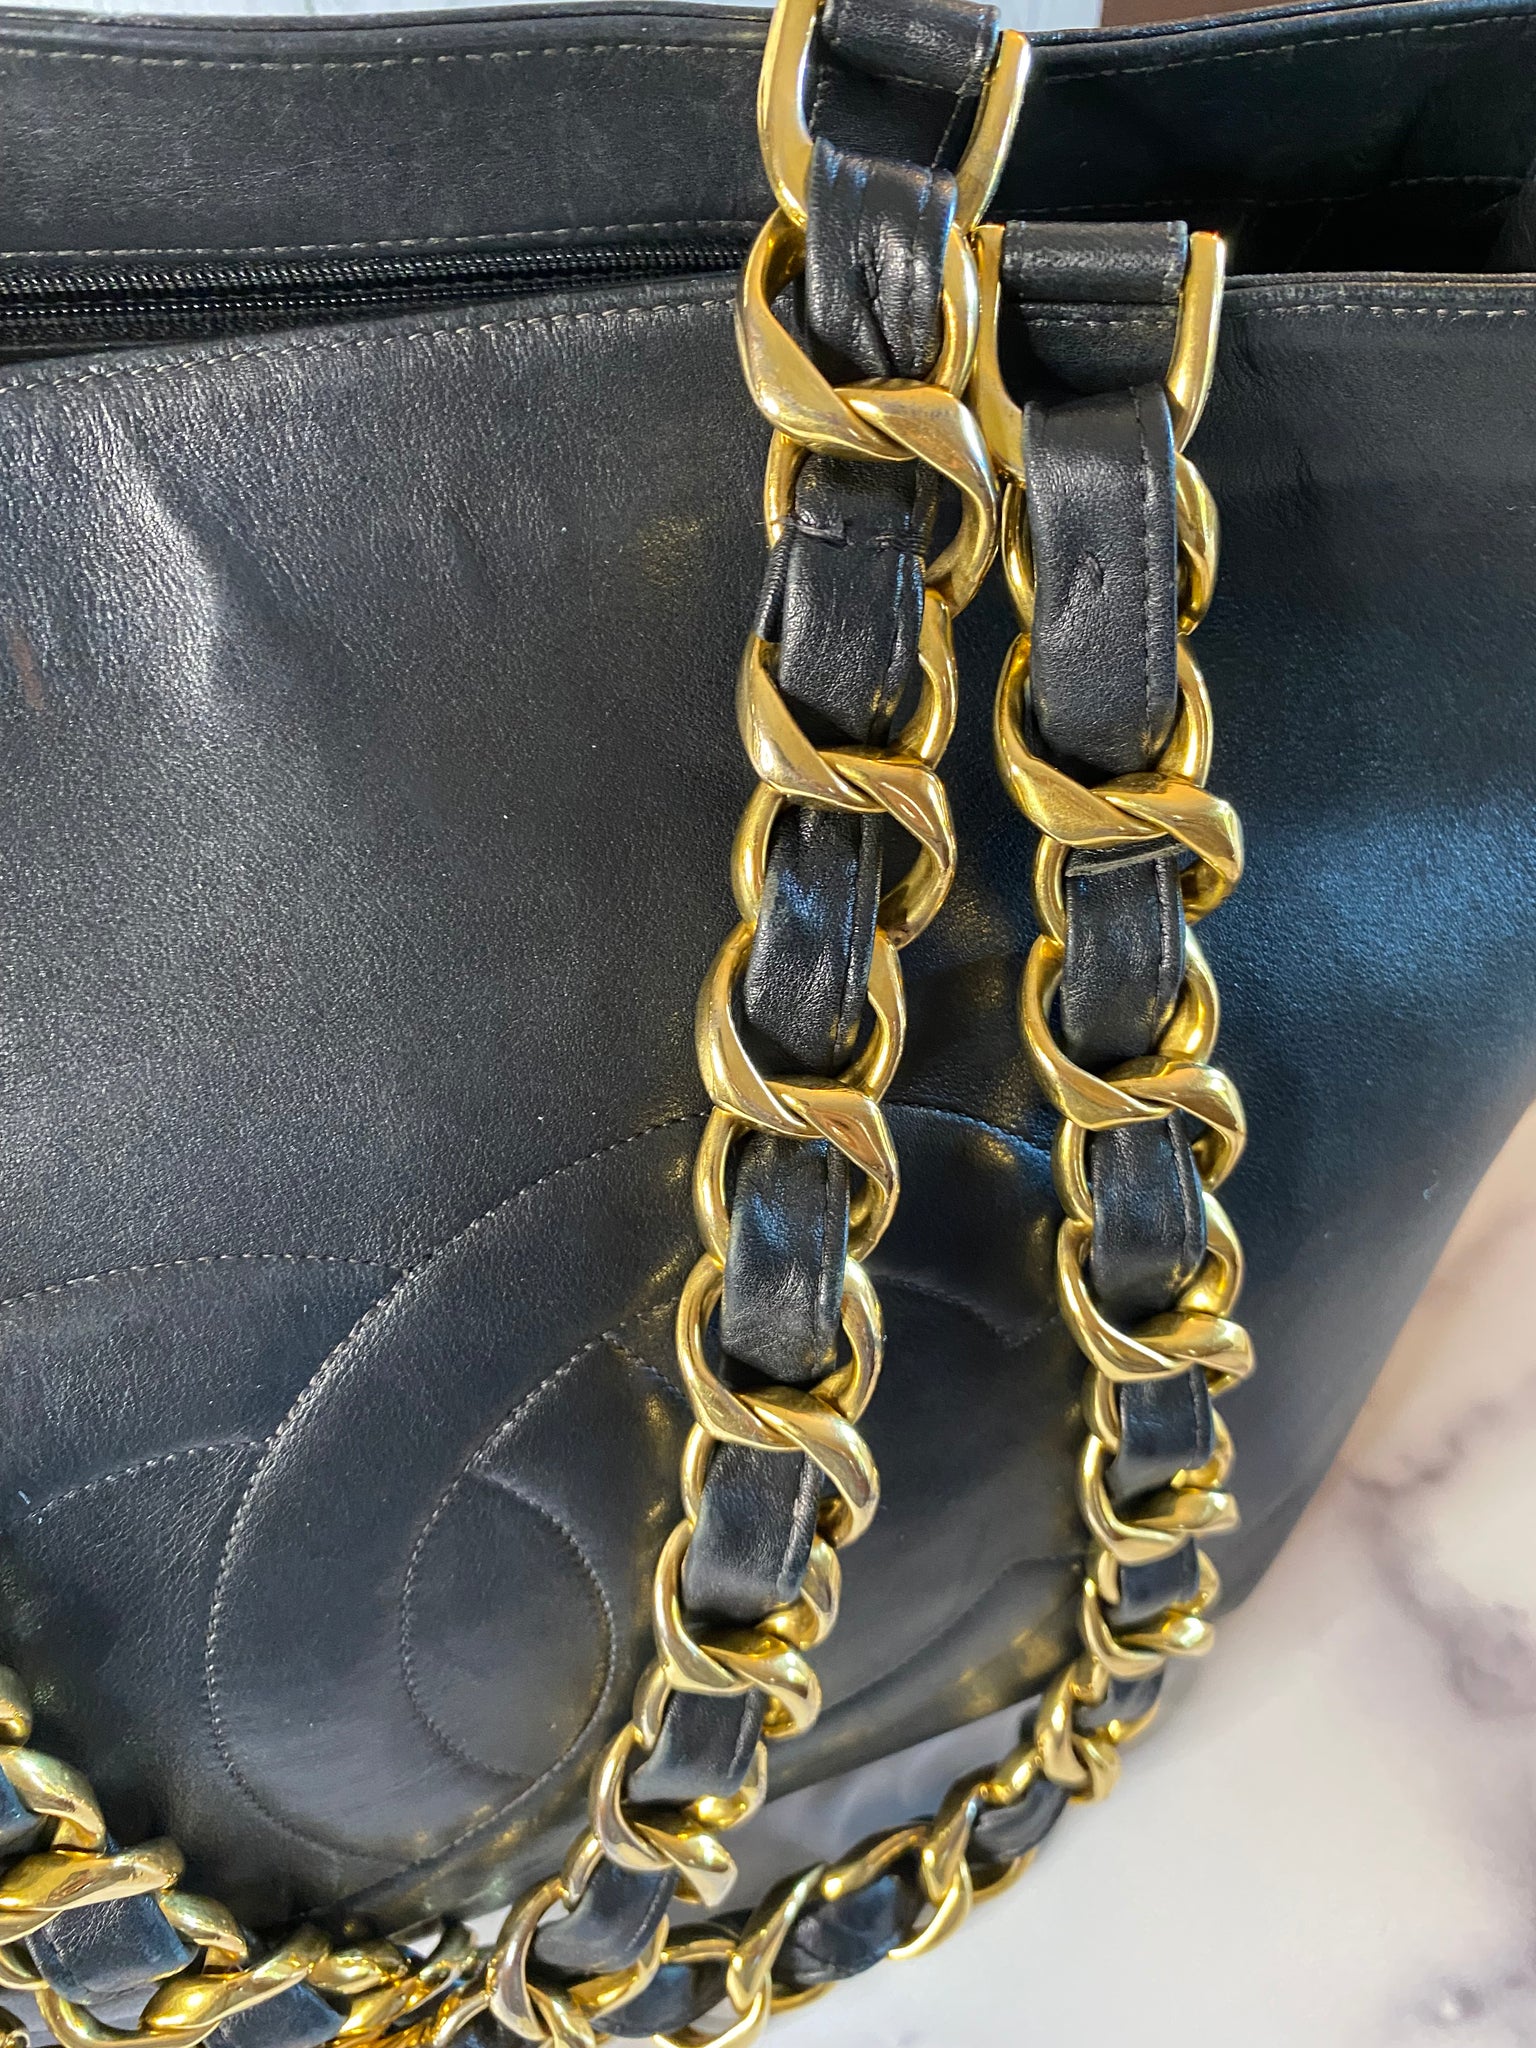 Lot - CHANEL Circa 2015/16 Sac TIMELESS JUMBO Cuir caviar matelassé beige  Garnitures en métal doré Dimensions : 30 x 20 x 10 - Catalog# 694130  Hermès & Luxury Bags